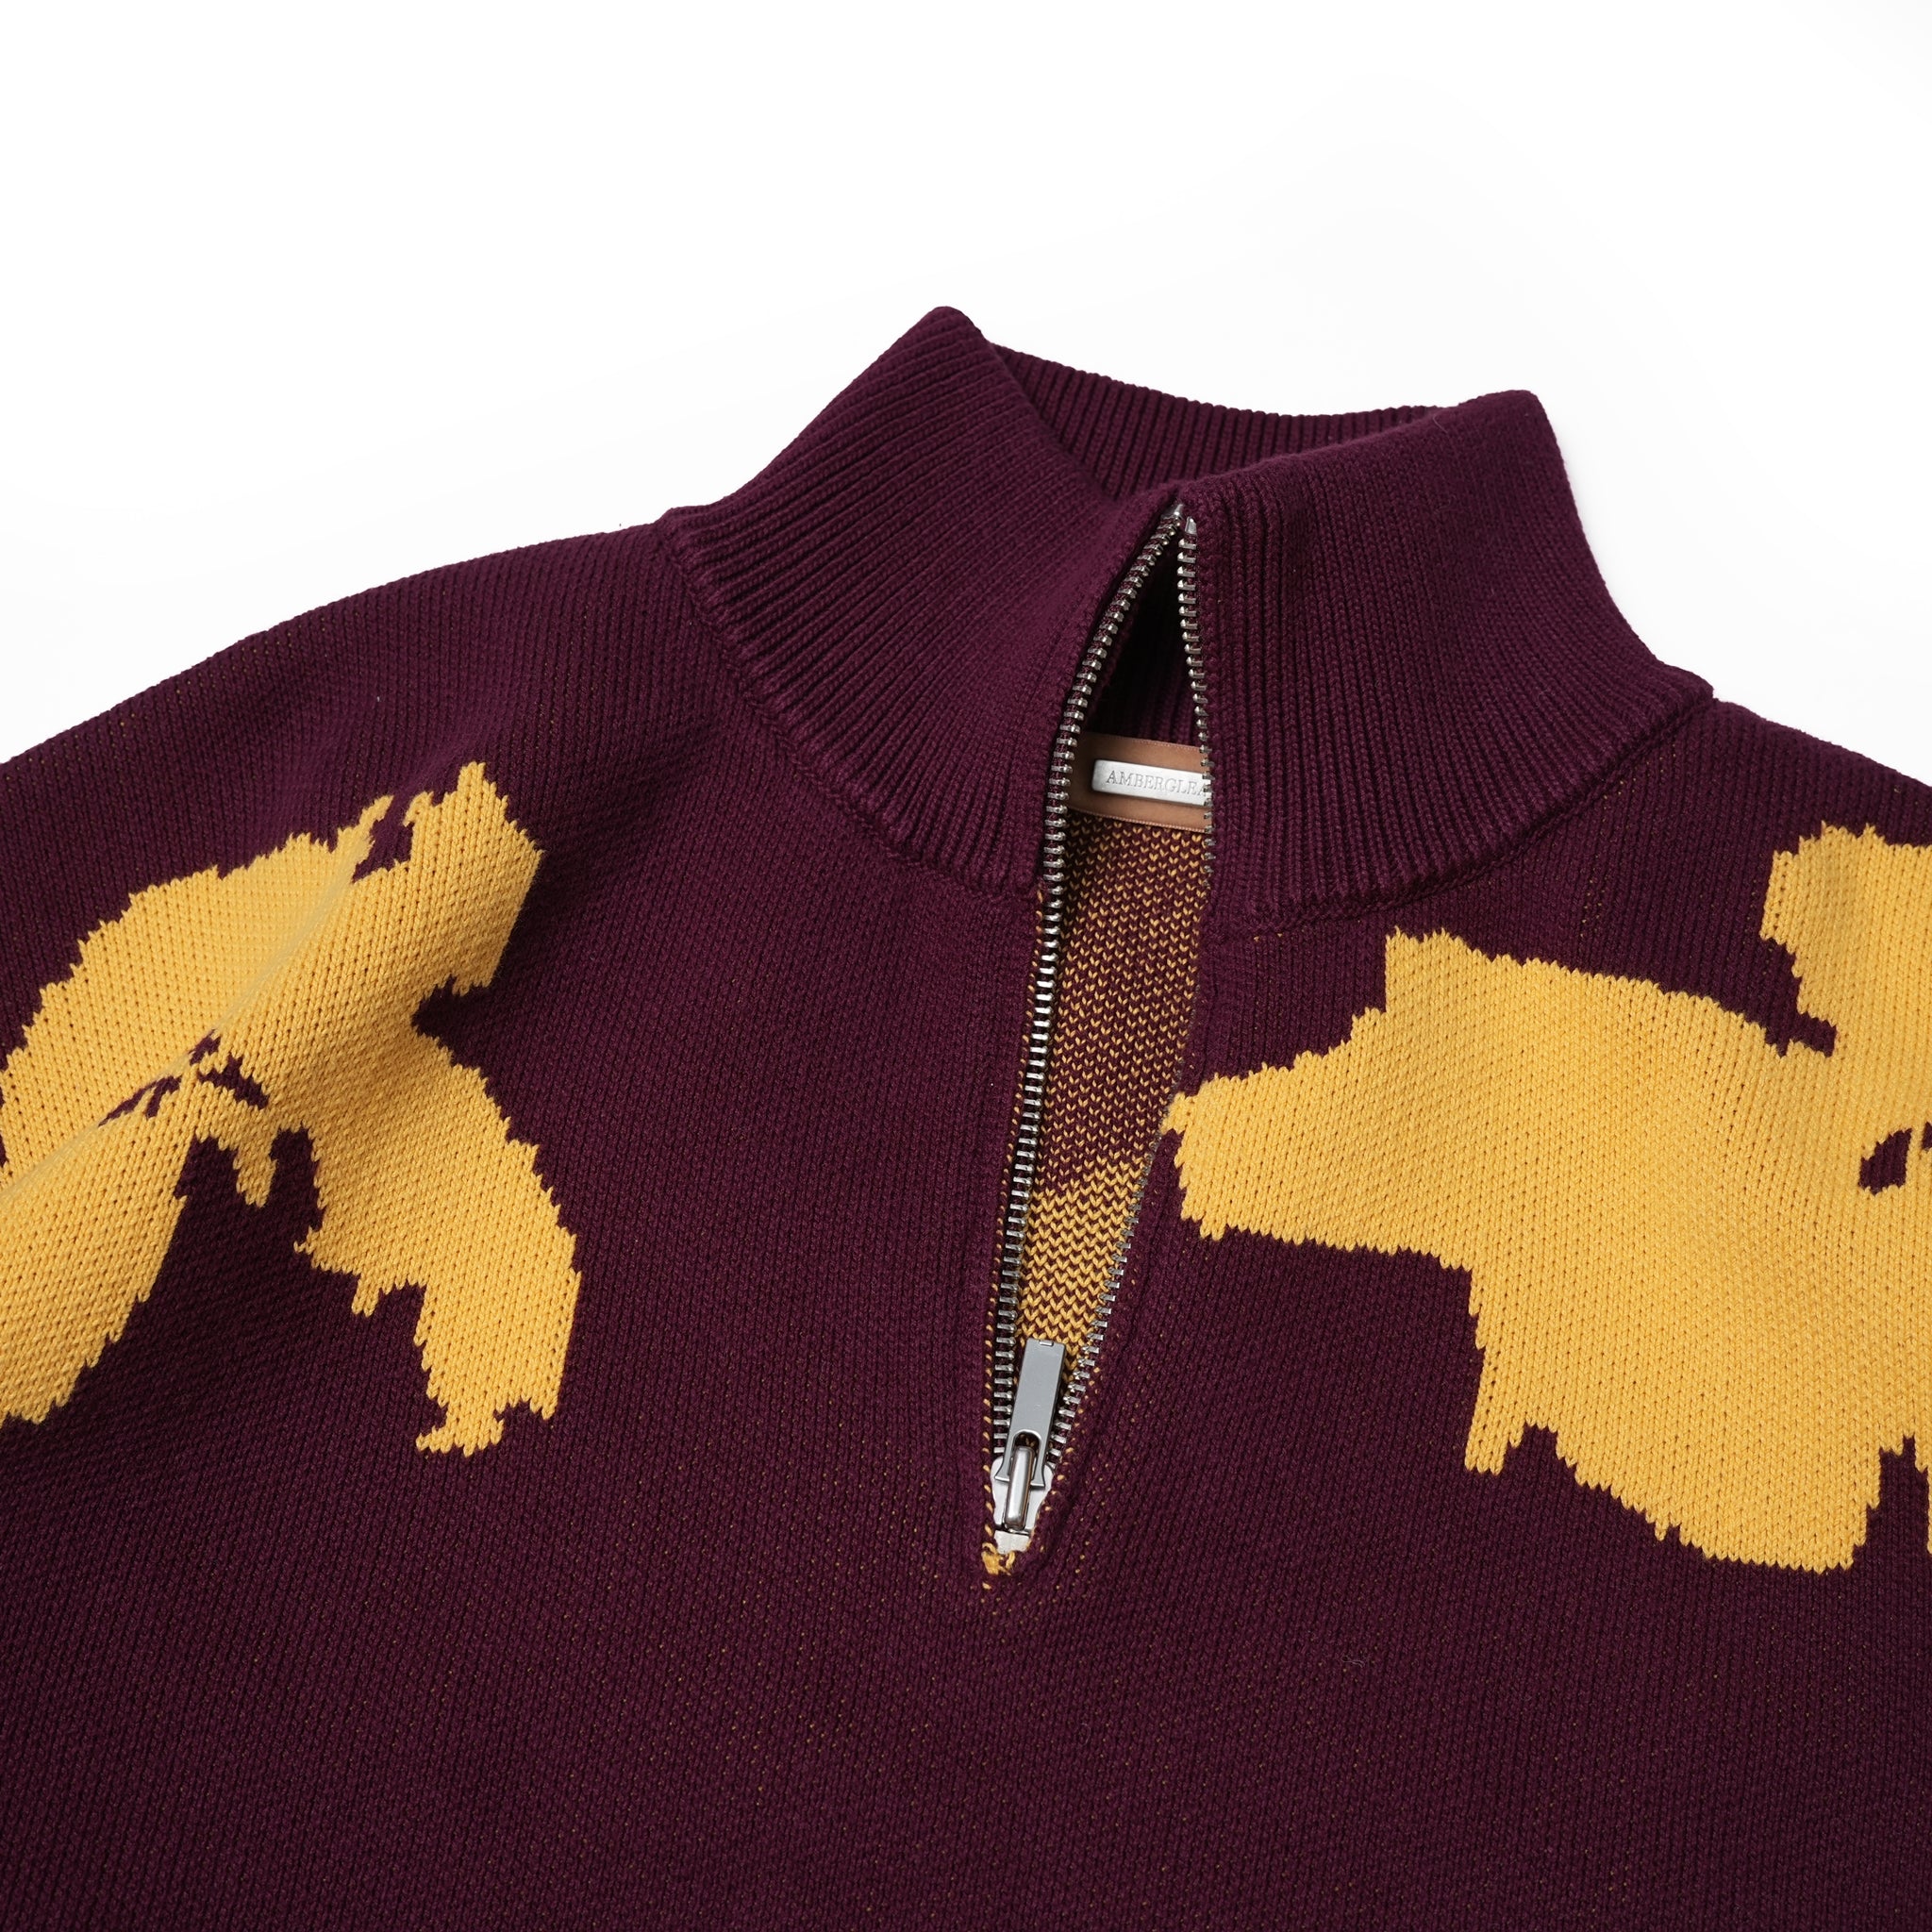 Name:Bicolor Half Zip Sweater | Color:Mulberry【AMBERGLEAM_アンバーグリーム】| No:1147131214